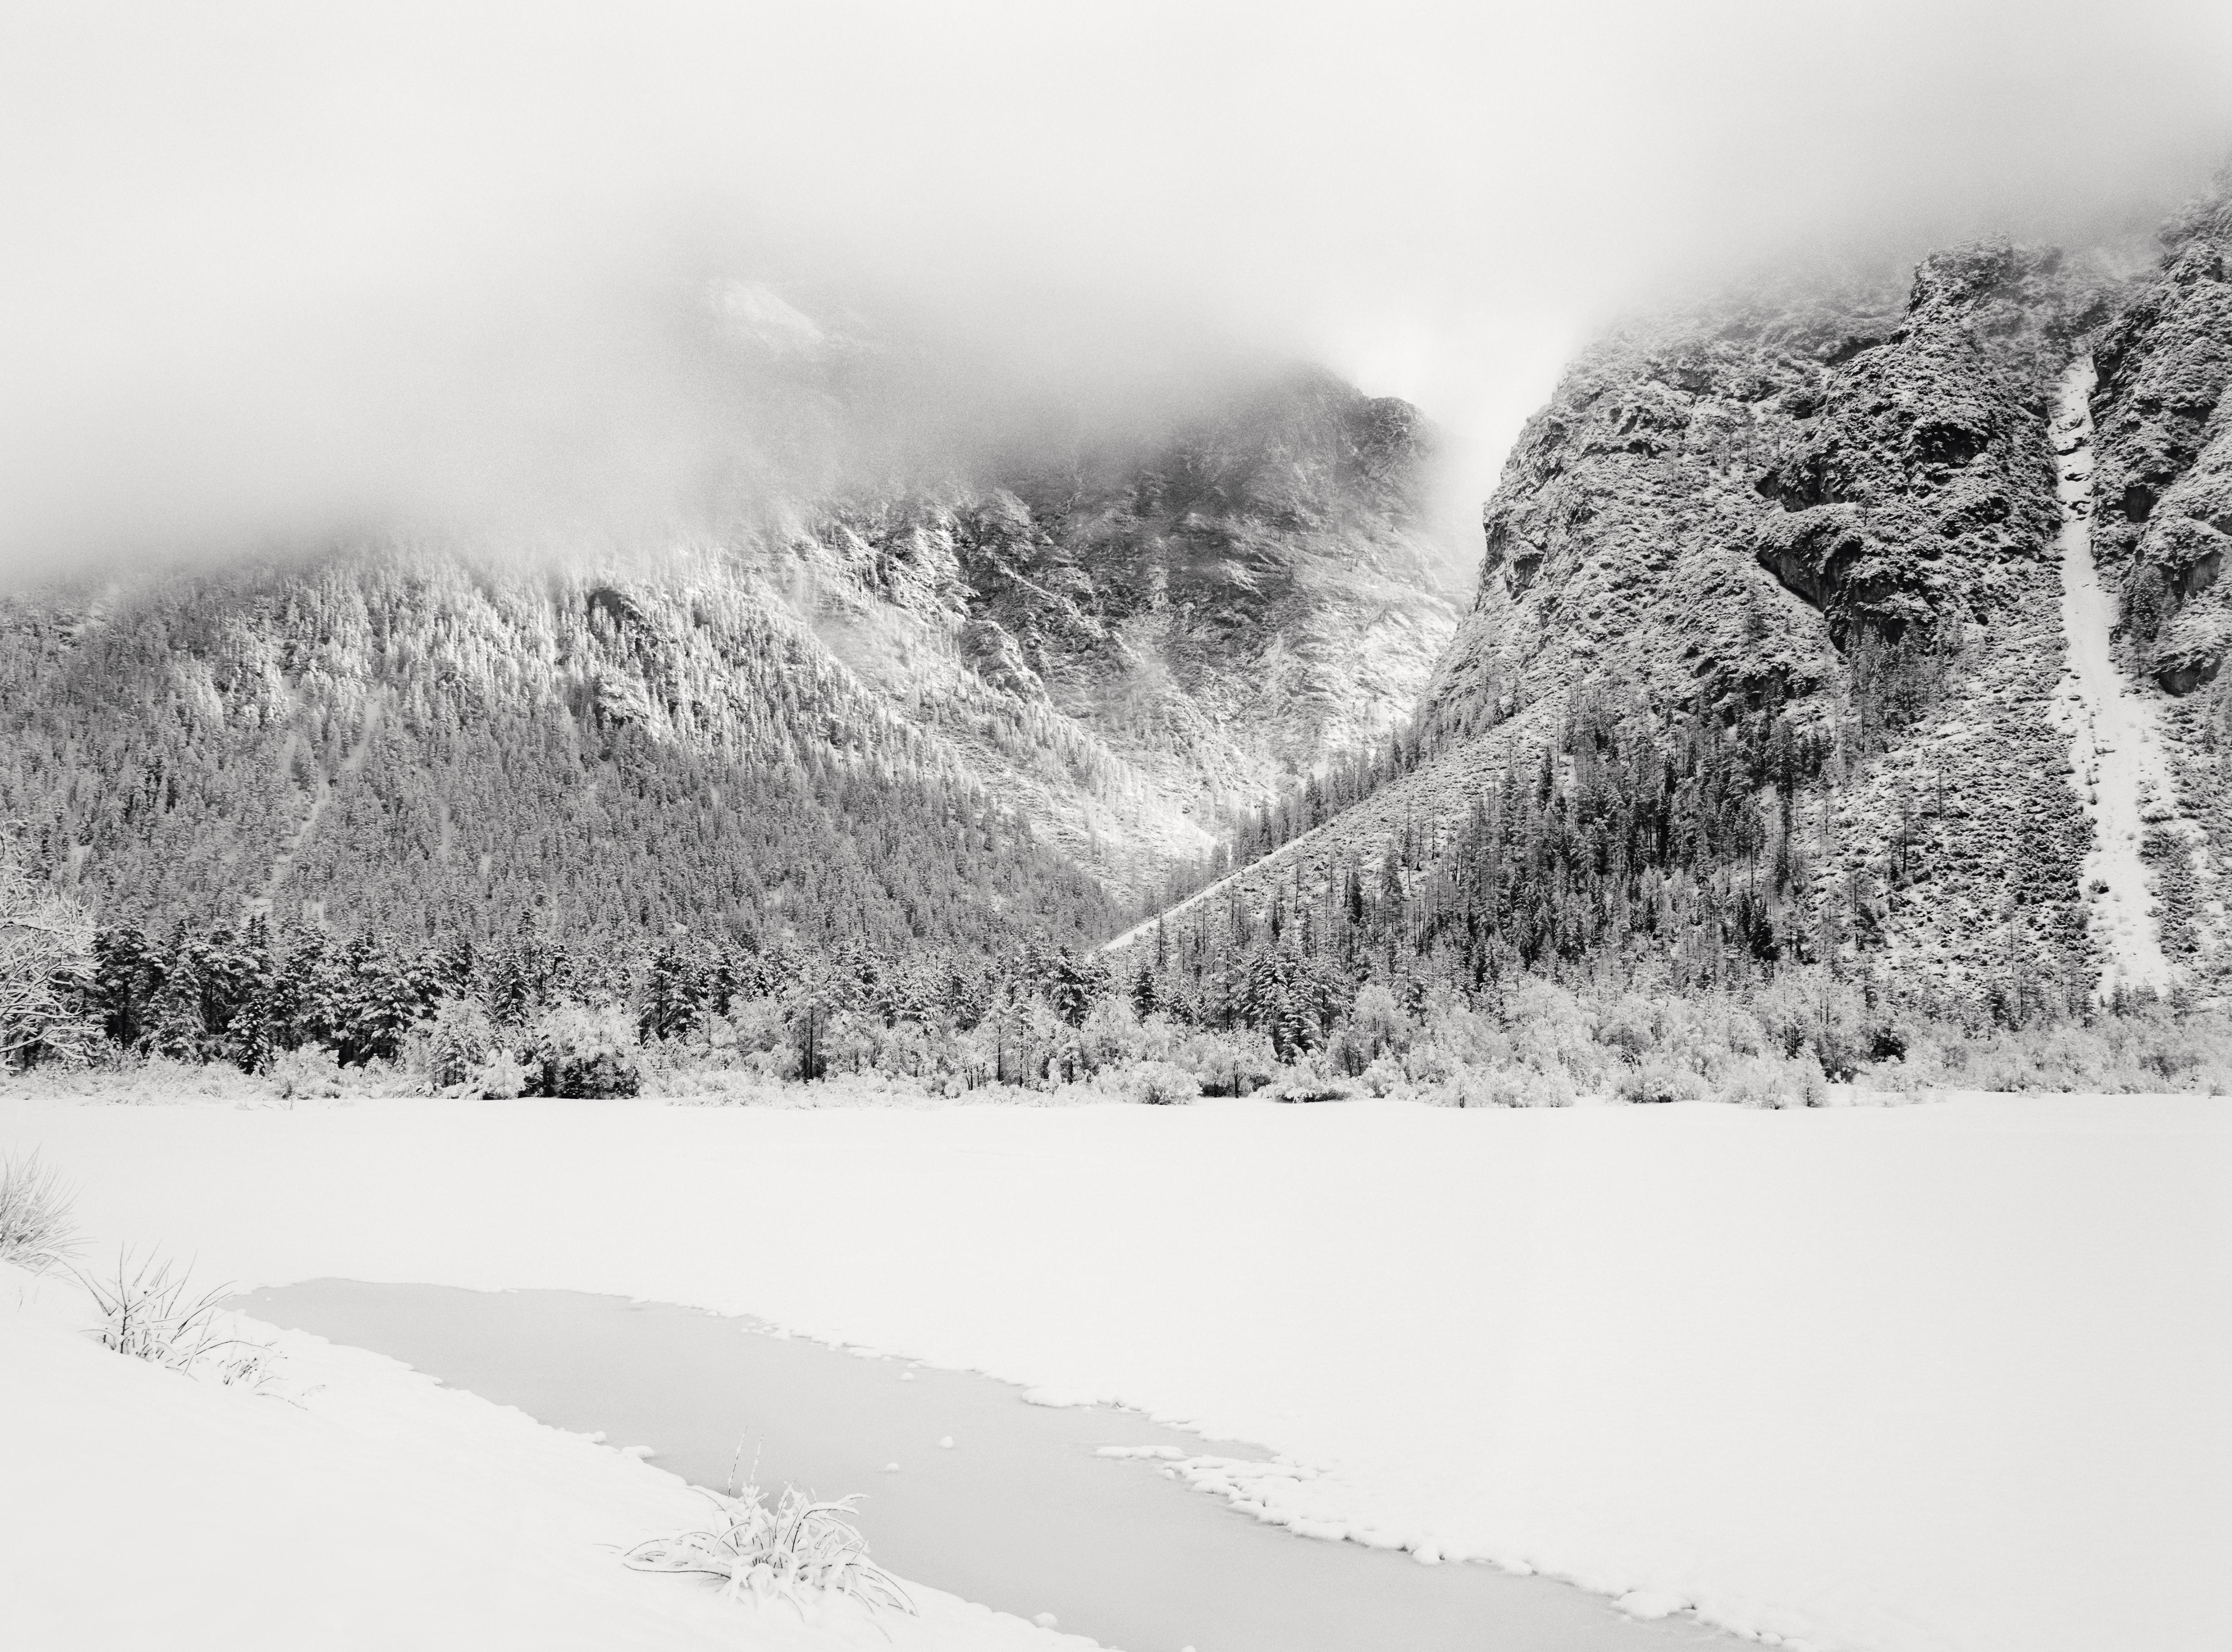 Ugne Pouwell Landscape Photograph – Cortina D'Ampezzo Nr.2, Analogue Schwarz-Weiß-Landschaftsfotografie, Ltd. 20